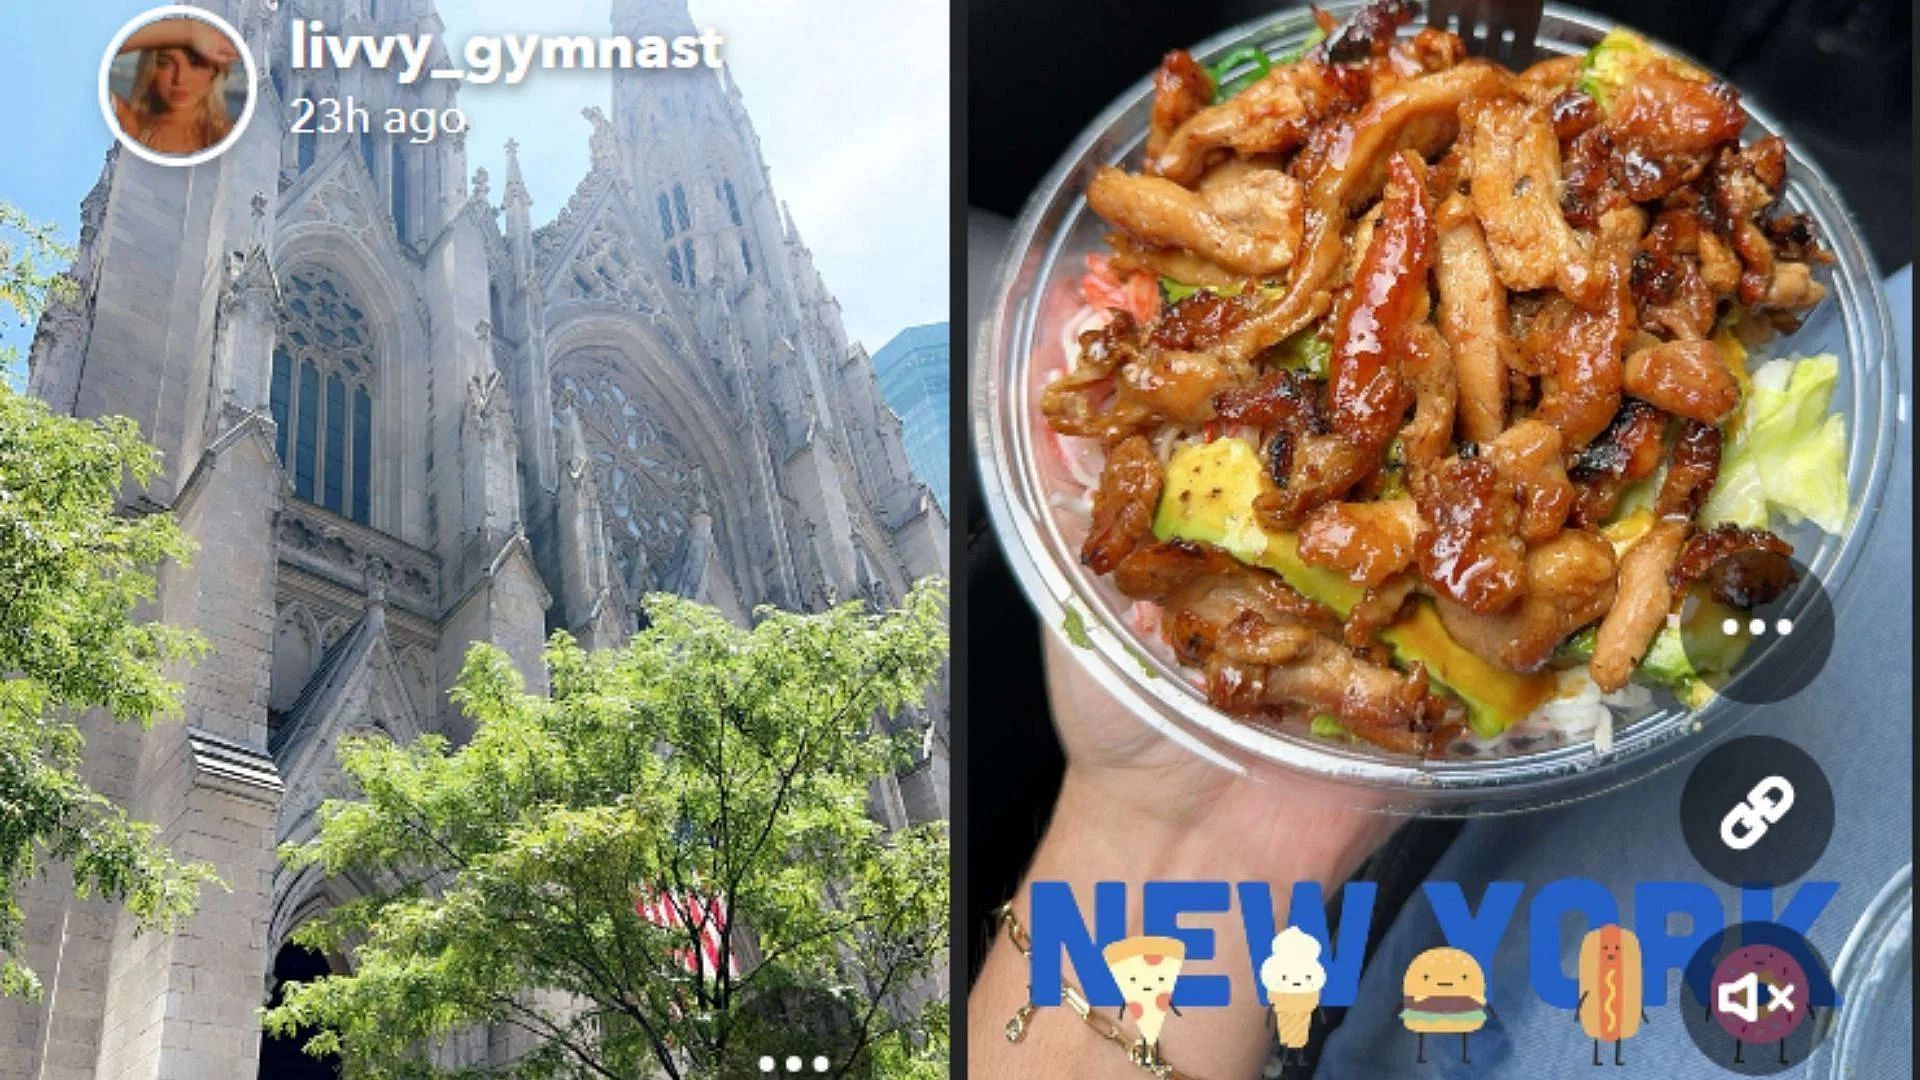 Olivia Dunne enjoying some street food in sunny New York City. (Image credit: Snapchat/livvy_gymnast)